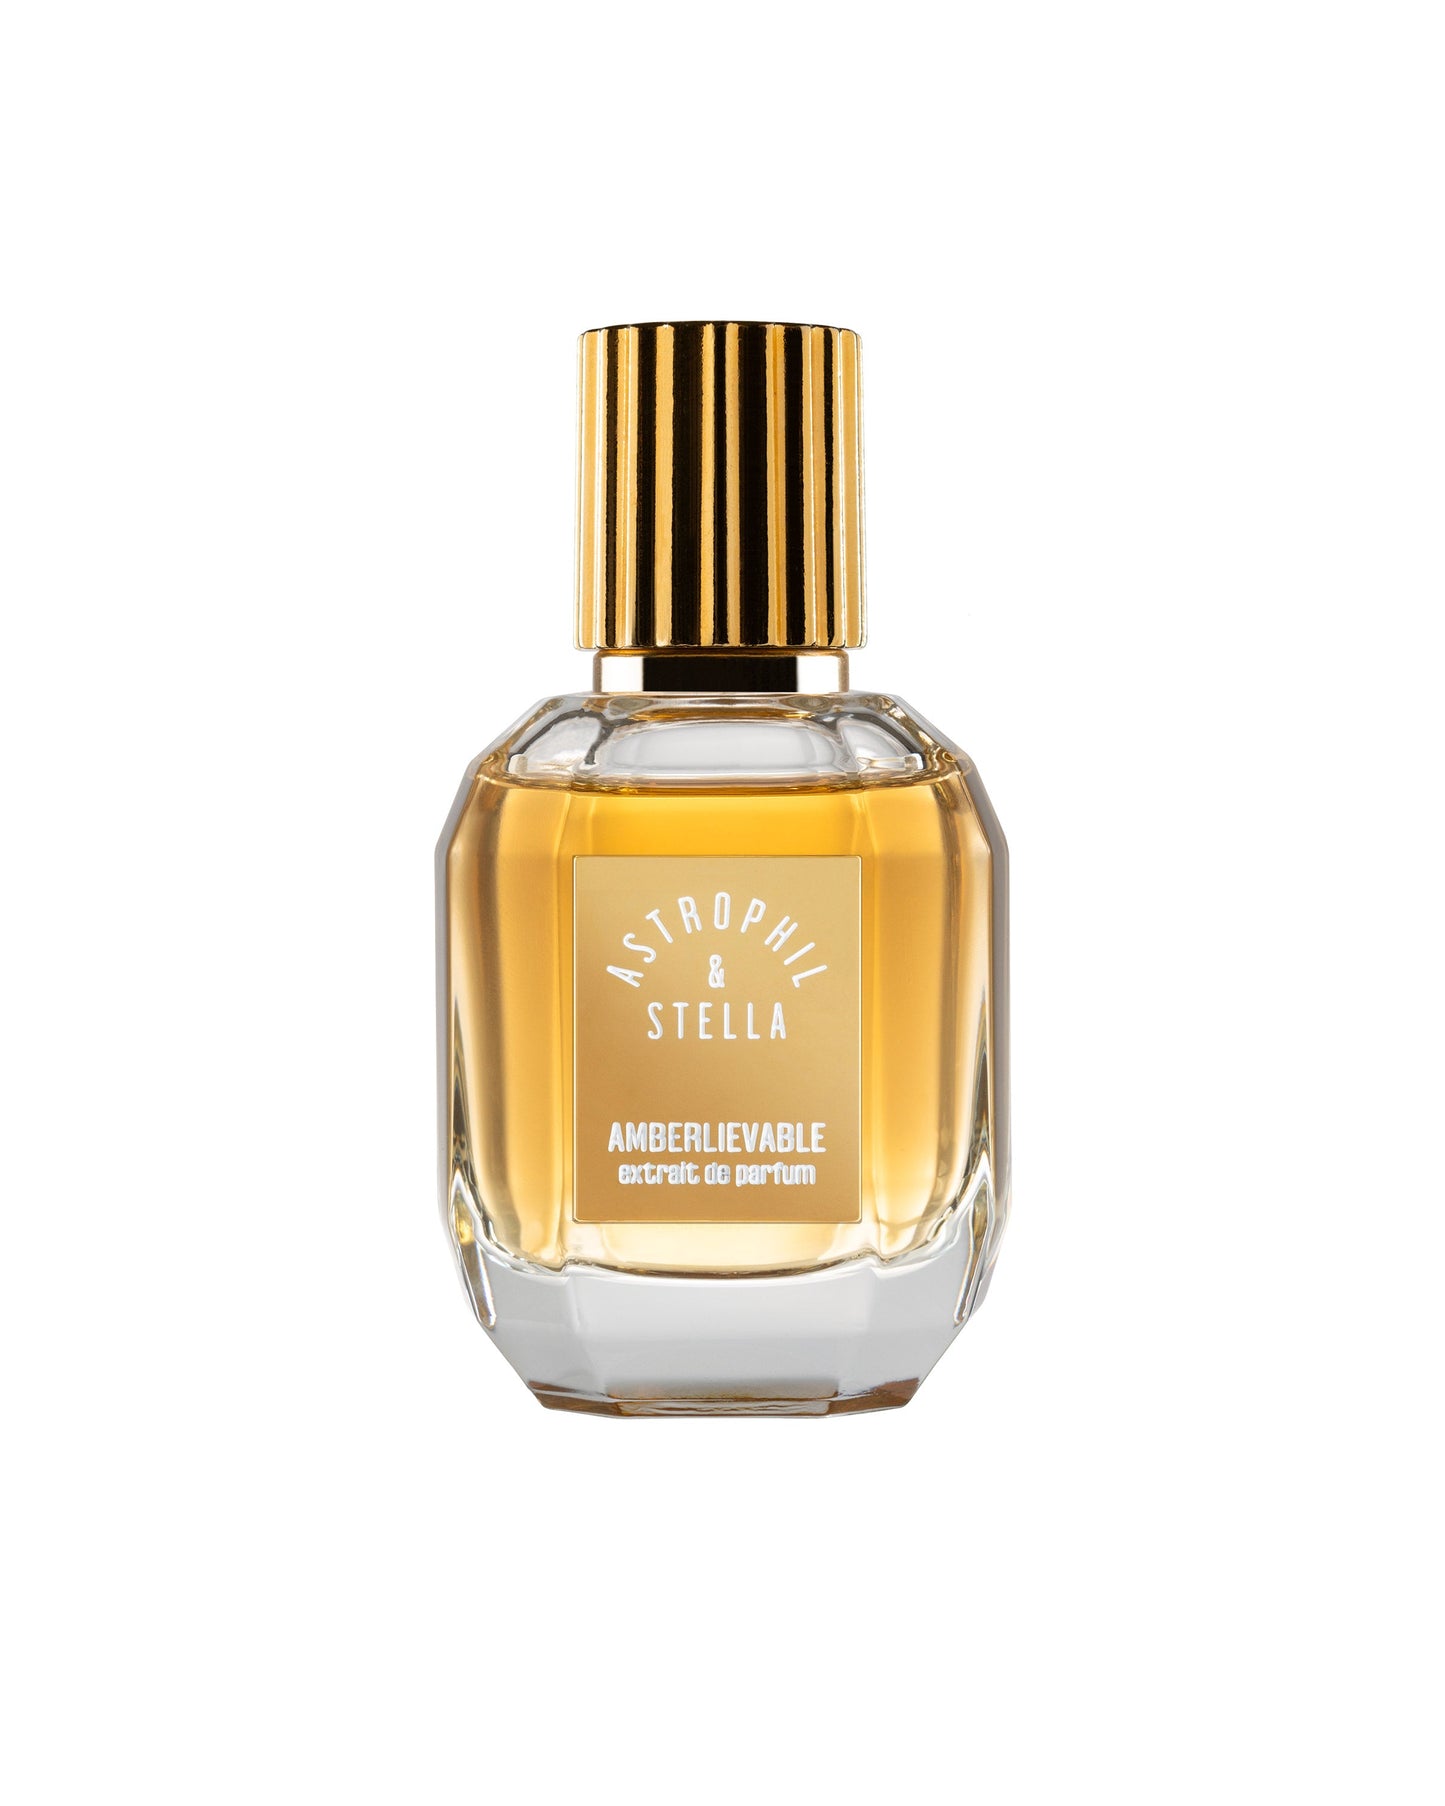 Amberlievable Astrophil & Stella Extrait de Parfum 50ml - TUXEDO.NO - OSLO NORWAY - ON DEMAND BARBERS